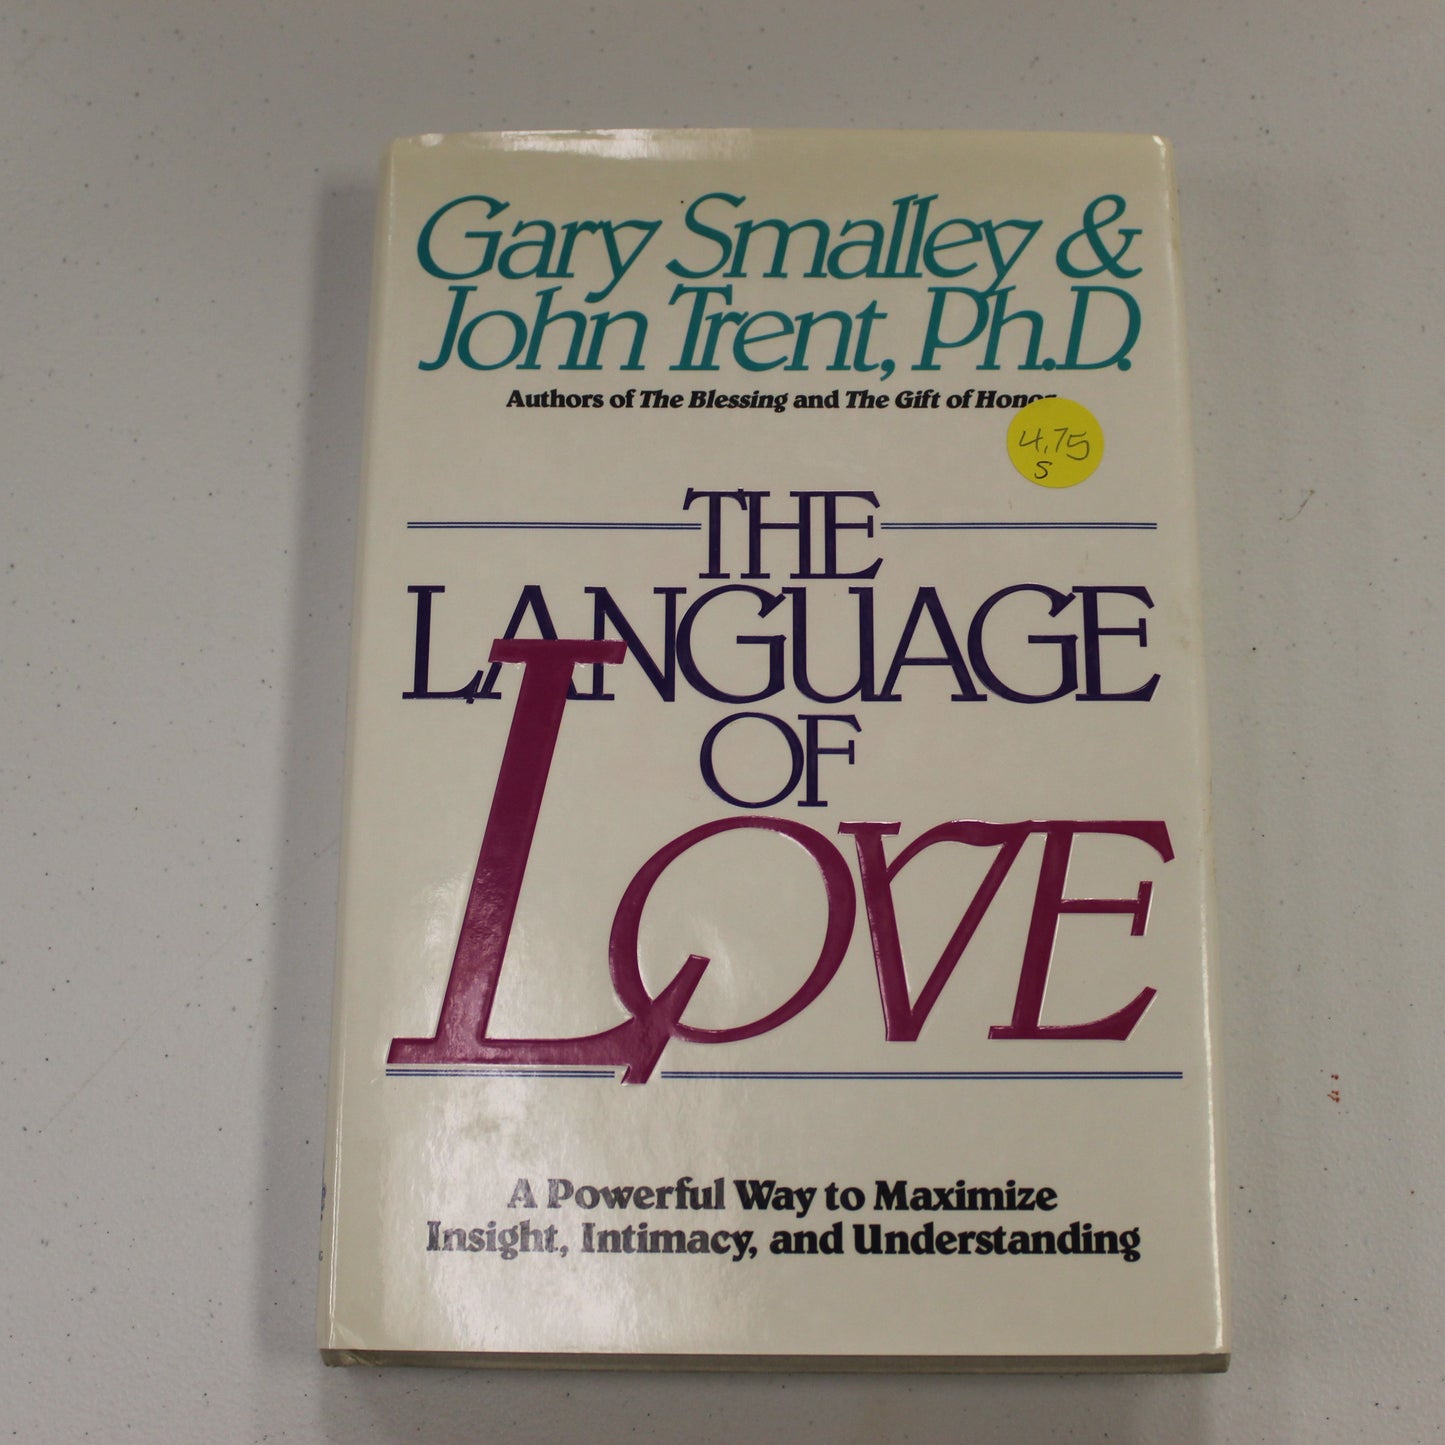 THE LANGUAGE OF LOVE